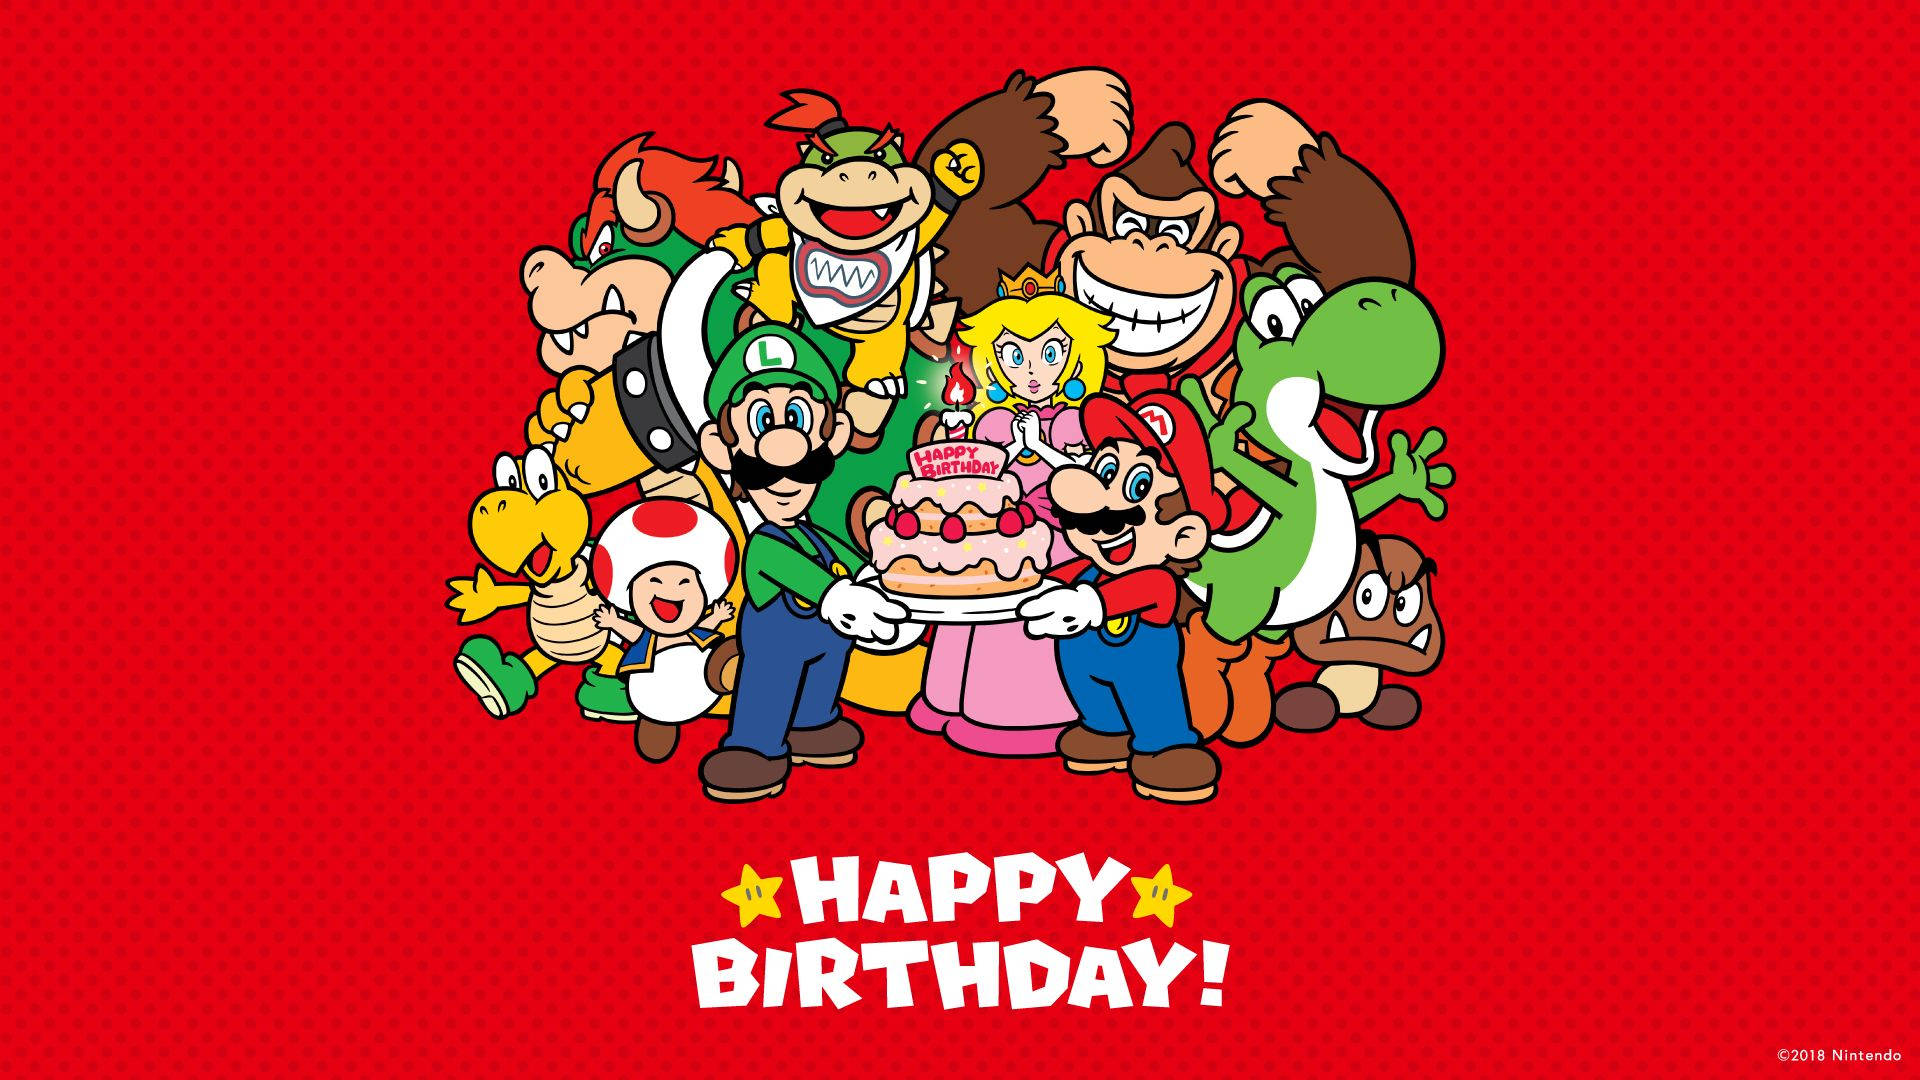 Birthday greetings with Nintendo Super Mario characters wallpaper